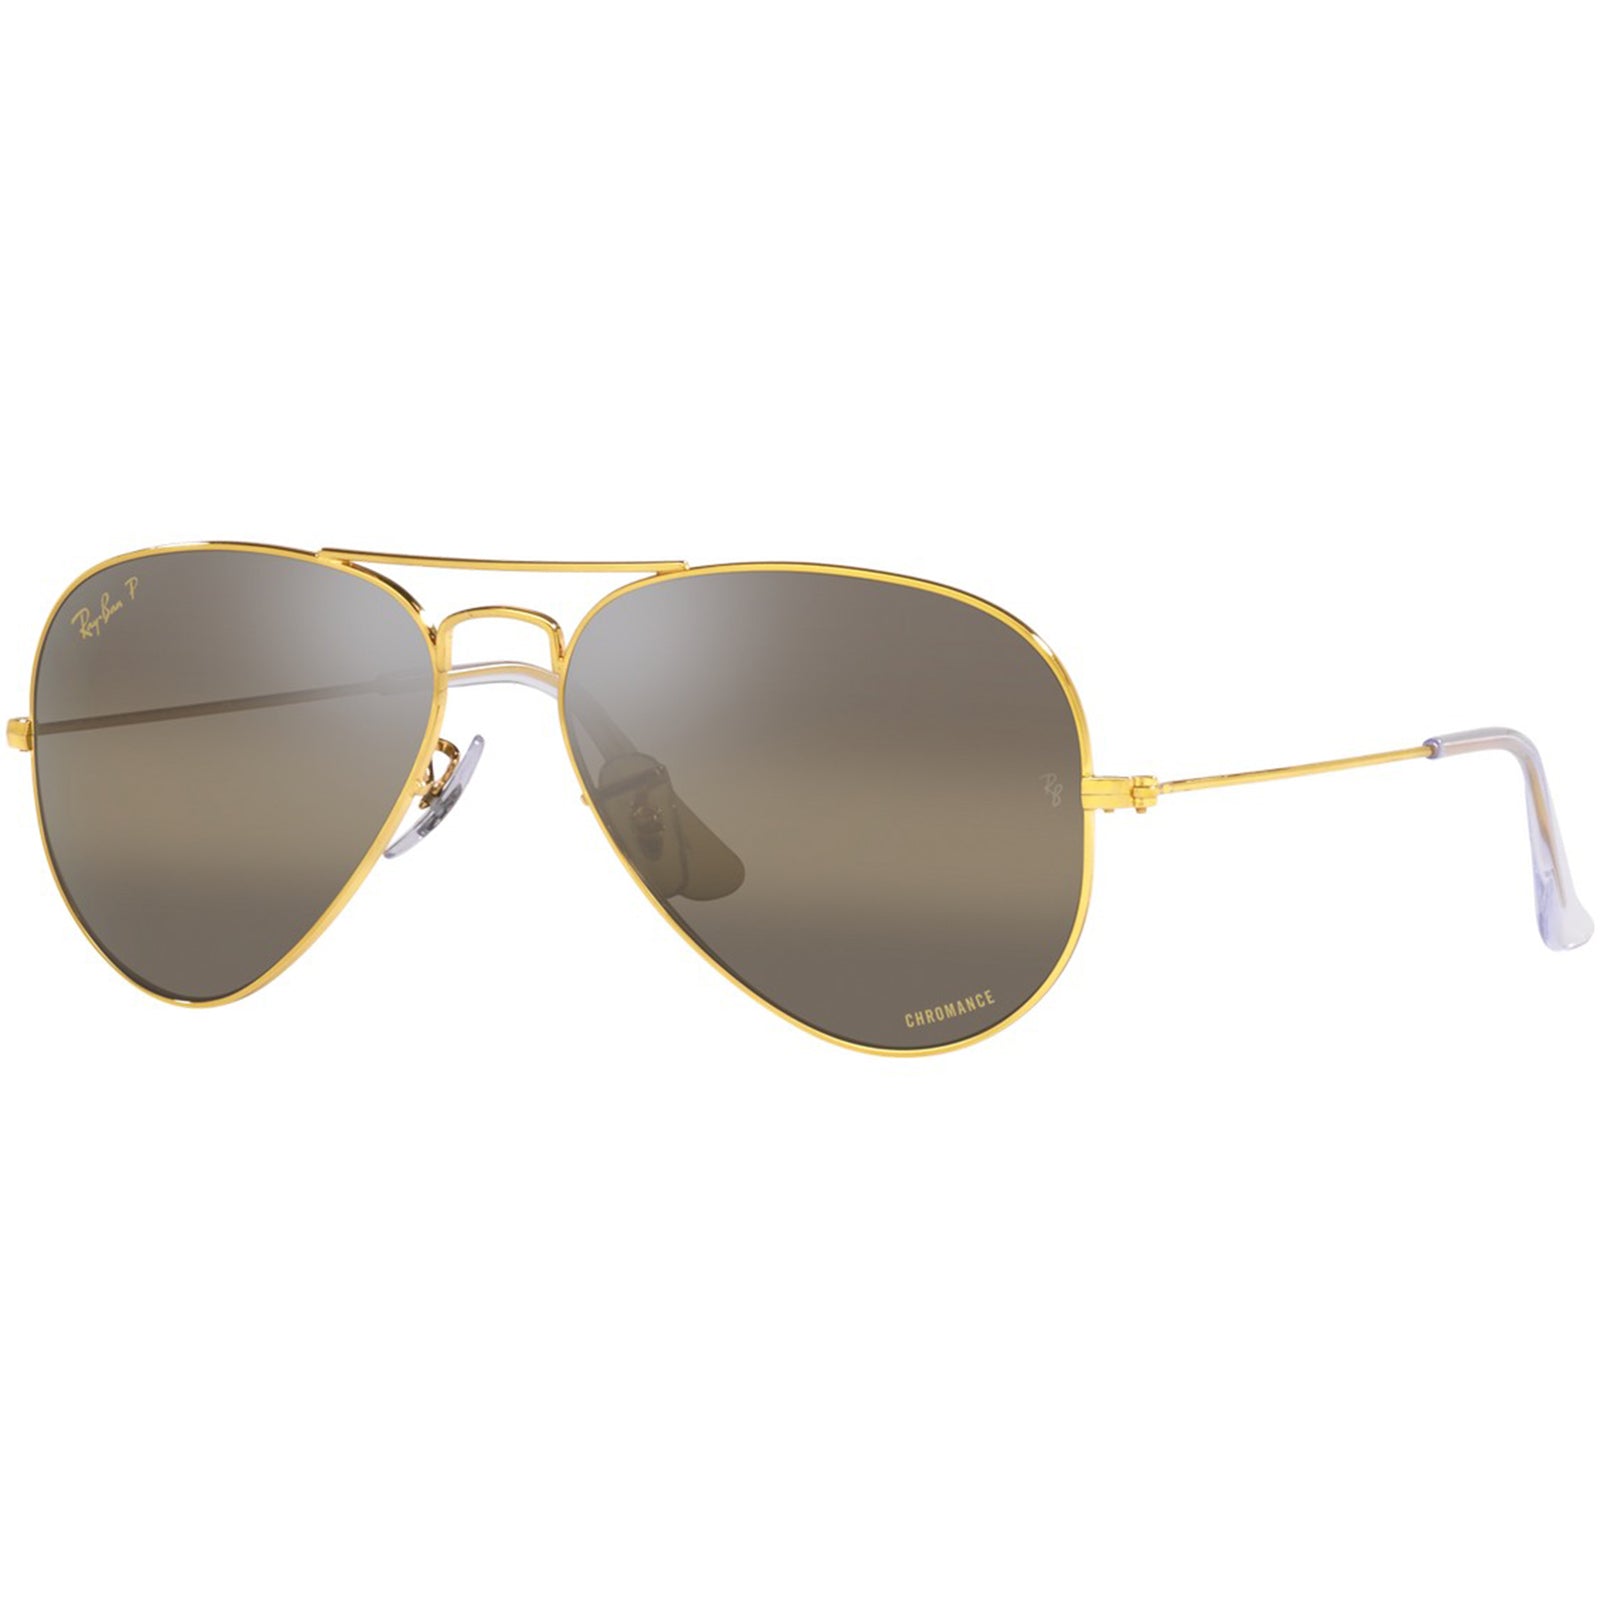 Ray-Ban Chromance Adult Aviator Polarized Sunglasses-0RB3025